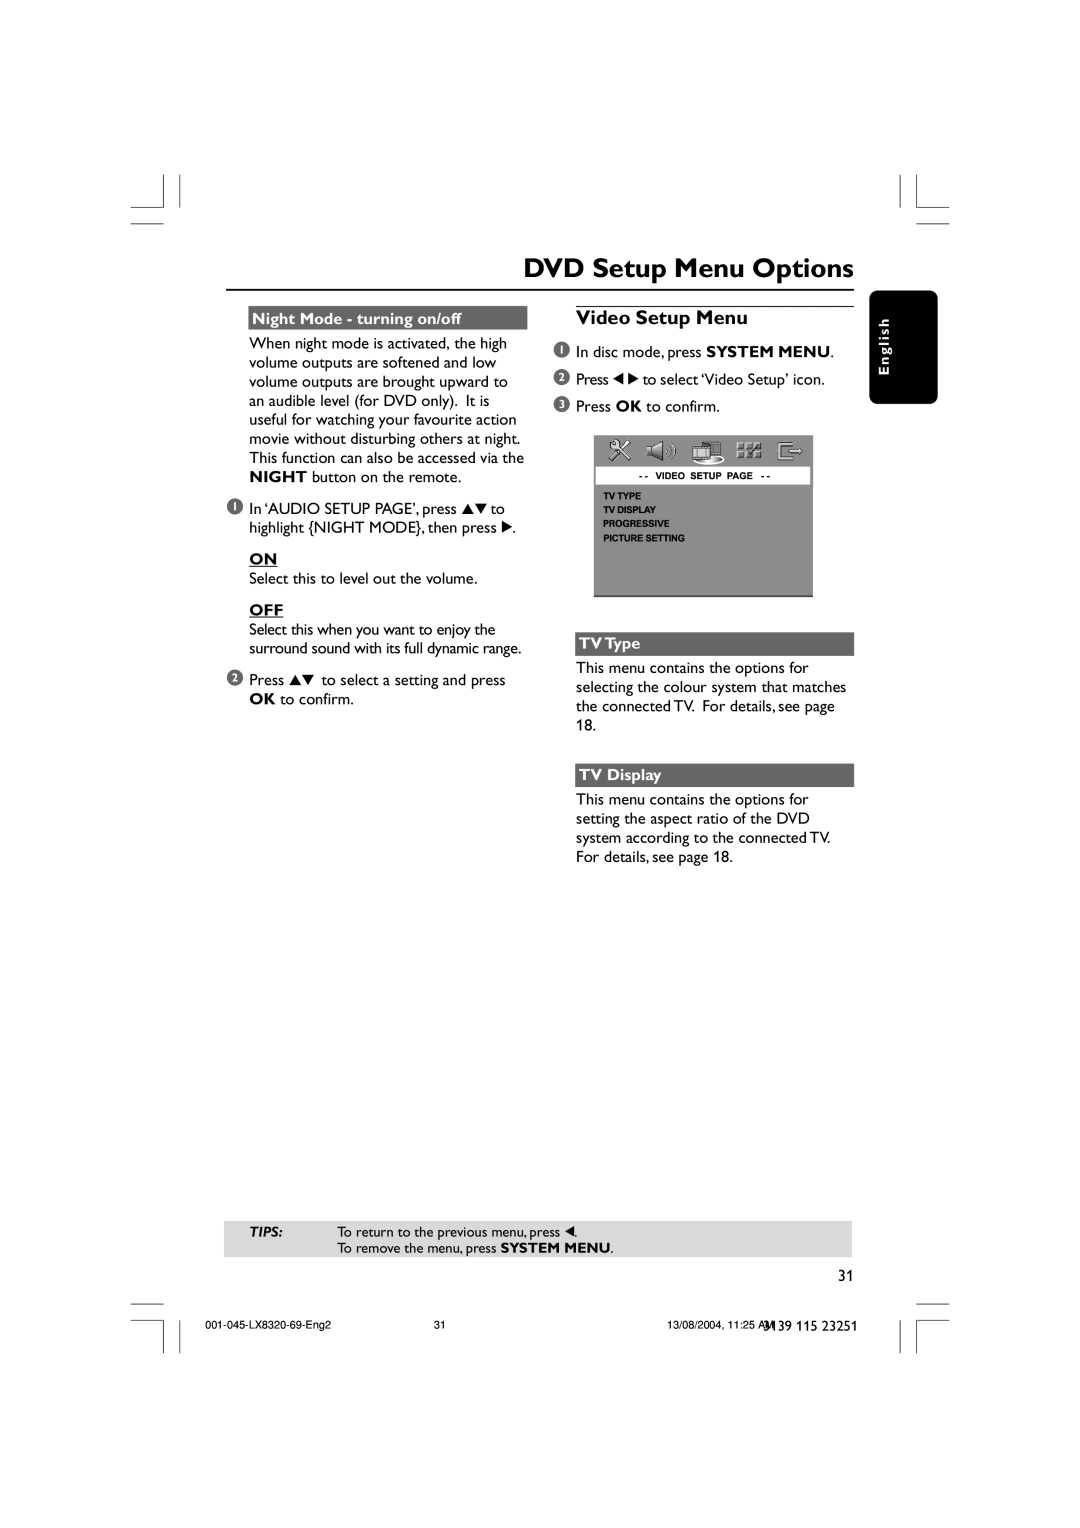 Philips LX8320 user manual Video Setup Menu, DVD Setup Menu Options, Night Mode - turning on/off, TV Type, TV Display 